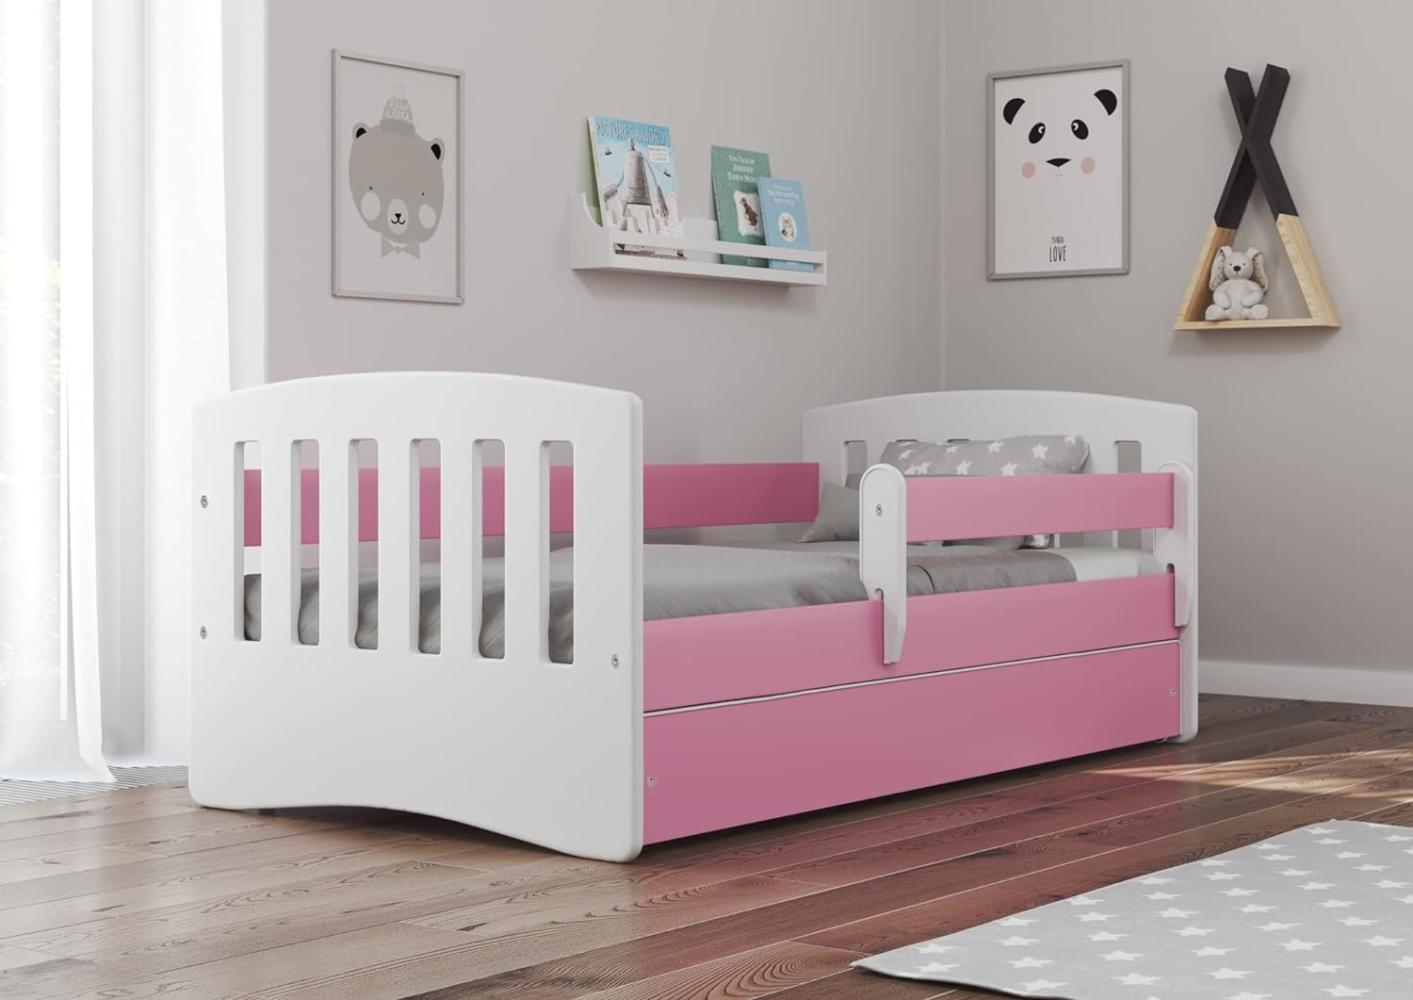 Bjird 'Classic' Kinderbett 80 x 160 cm, Rosa, inkl. Rausfallschutz, Lattenrost und Bettschublade Bild 1